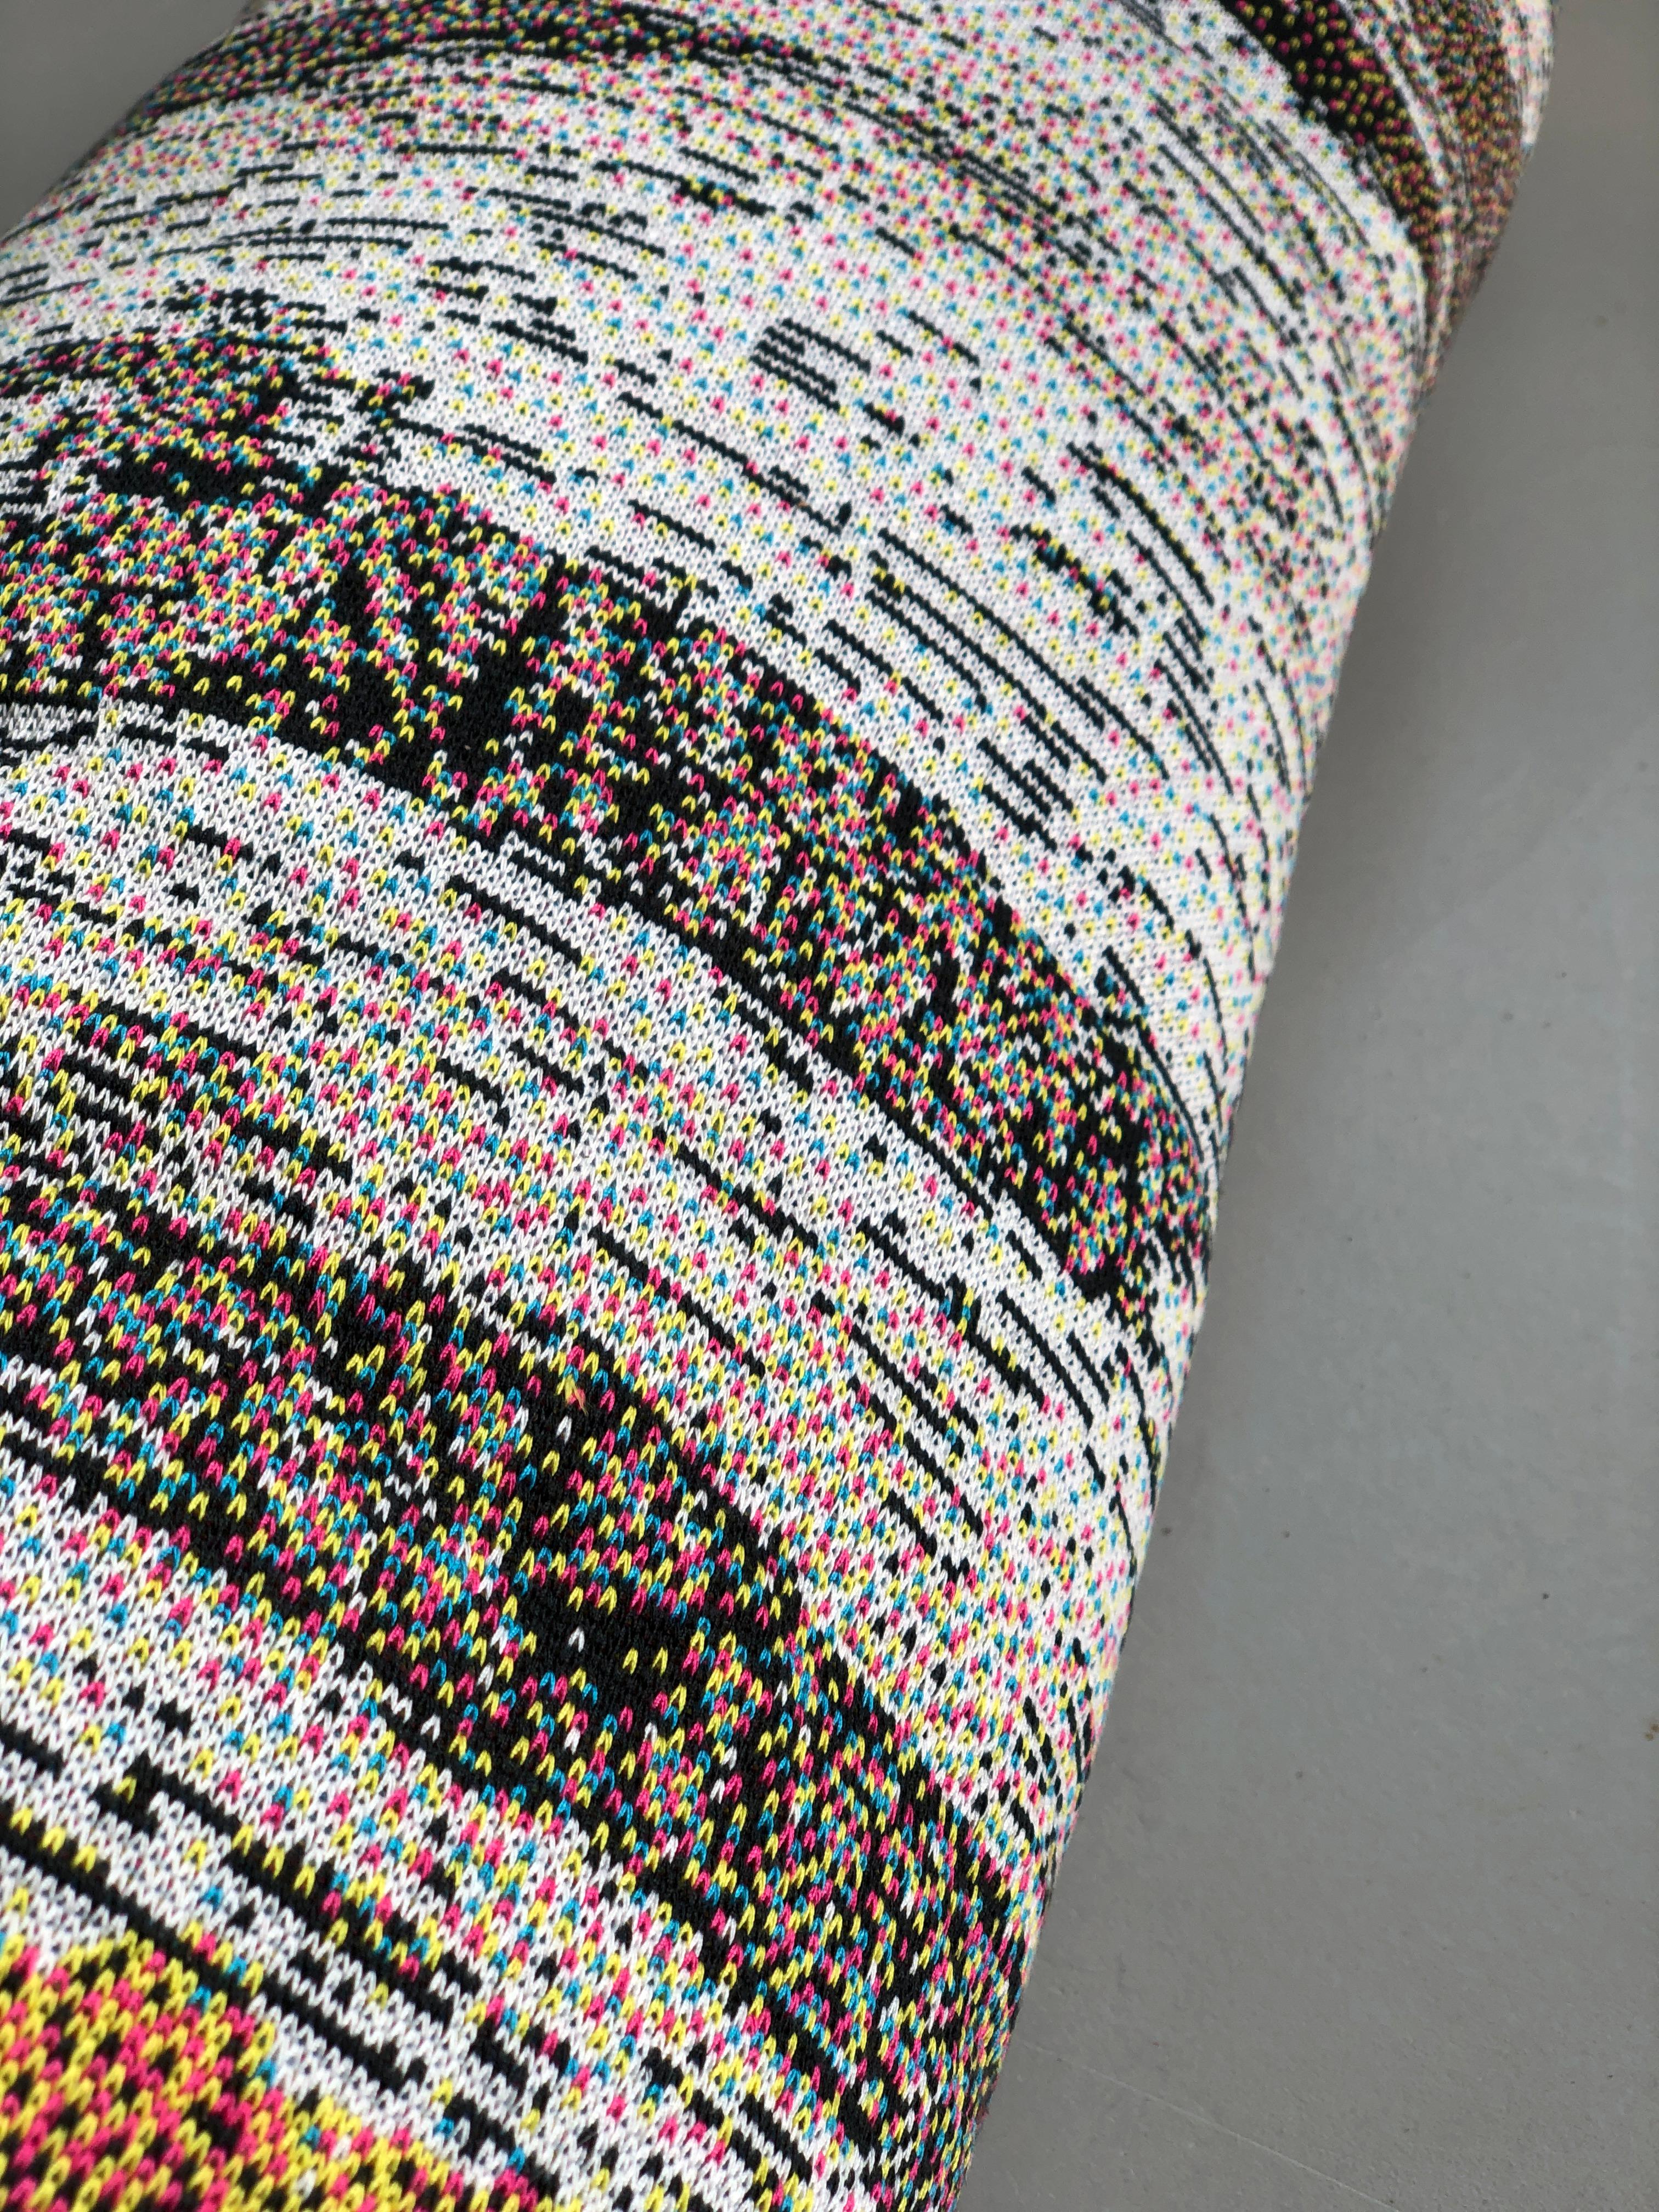 Needlework Short White Birch Tree log bolster knitted pixeled pillow - Textile - Pillows For Sale